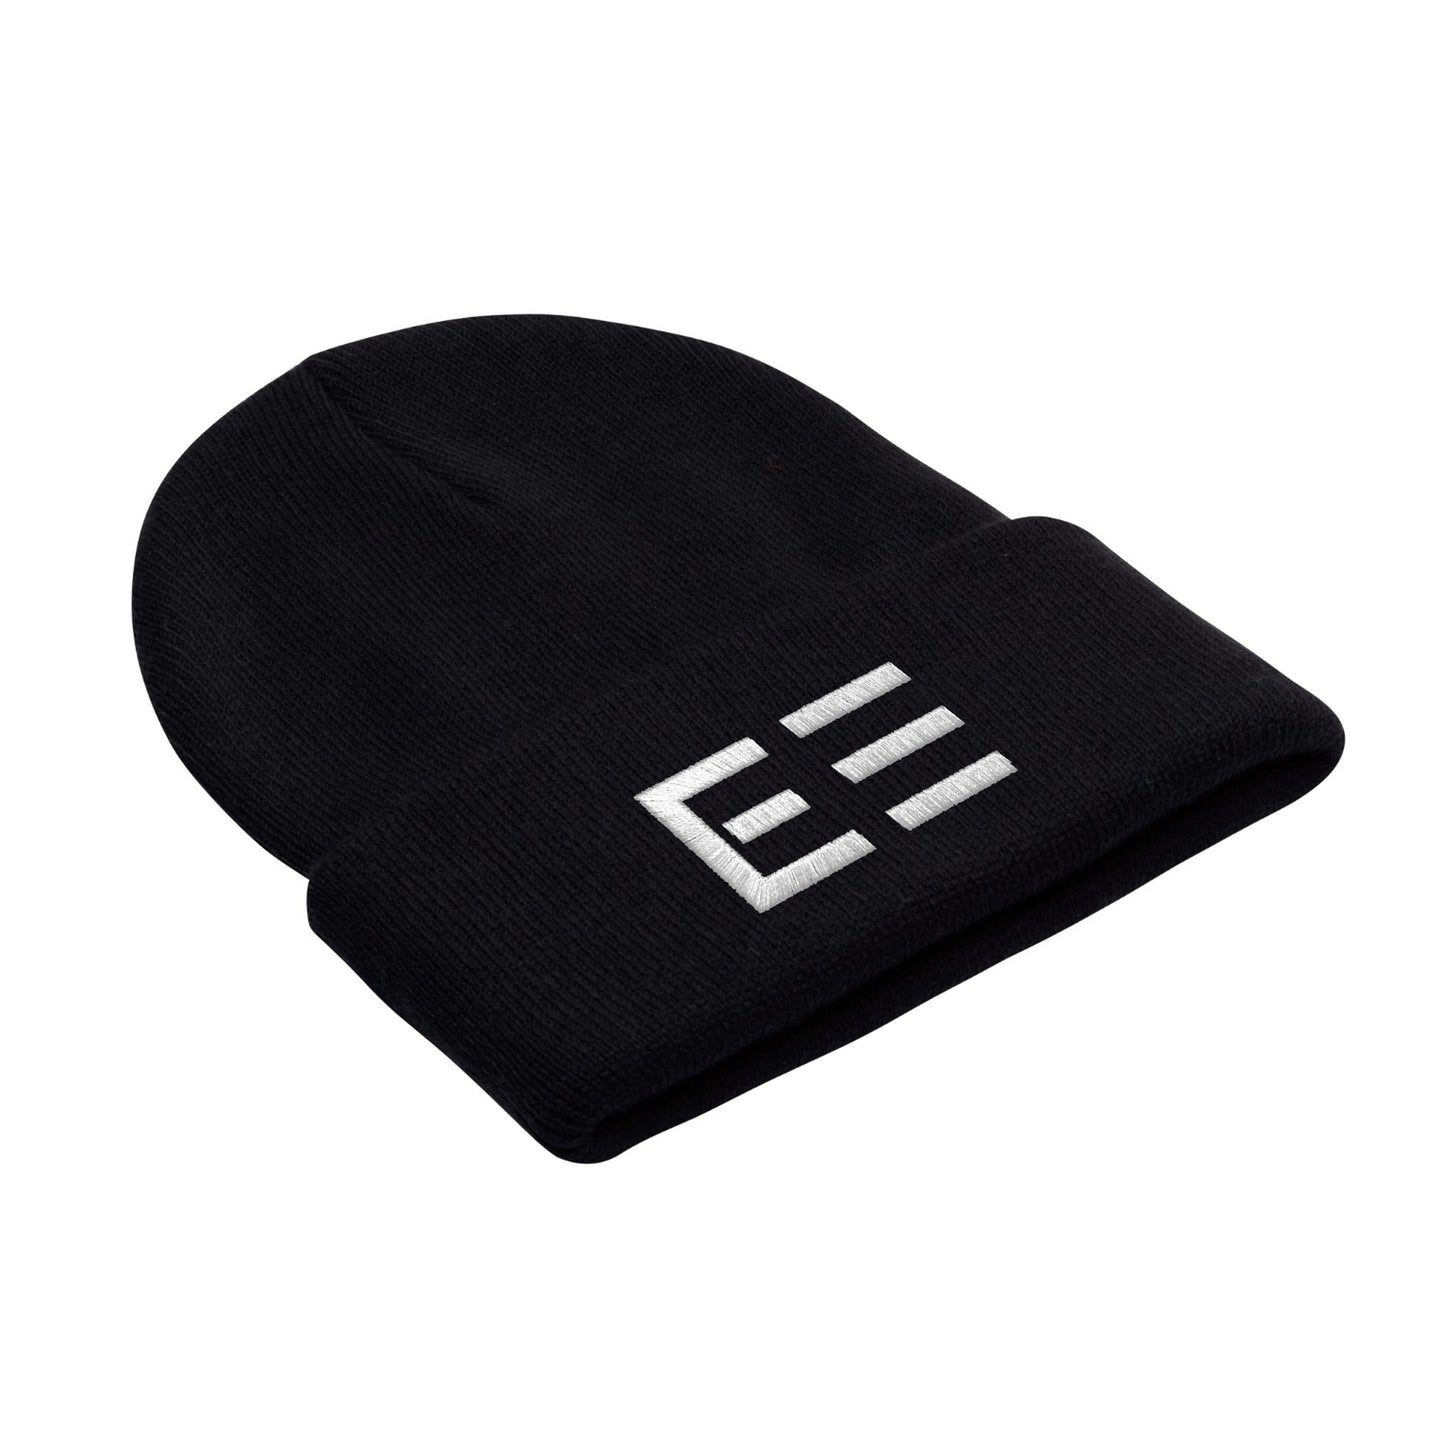 E3 Fleece-Lined Knit Cap